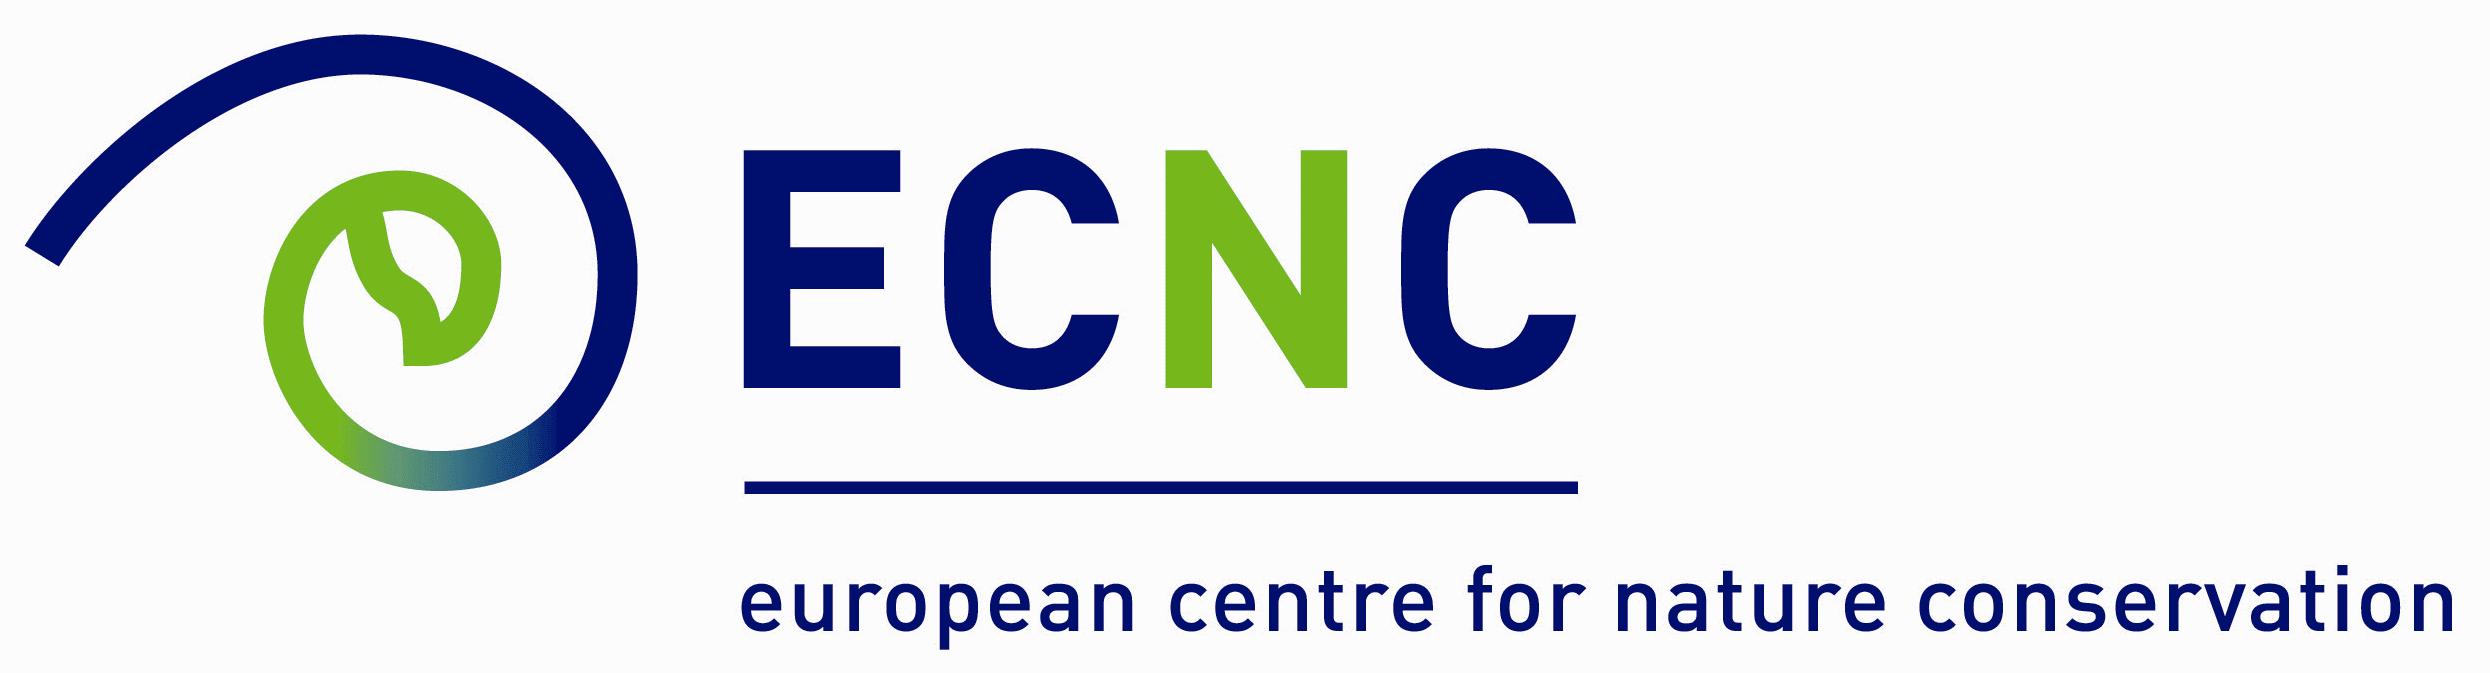 logo for ECNC - European Centre for Nature Conservation